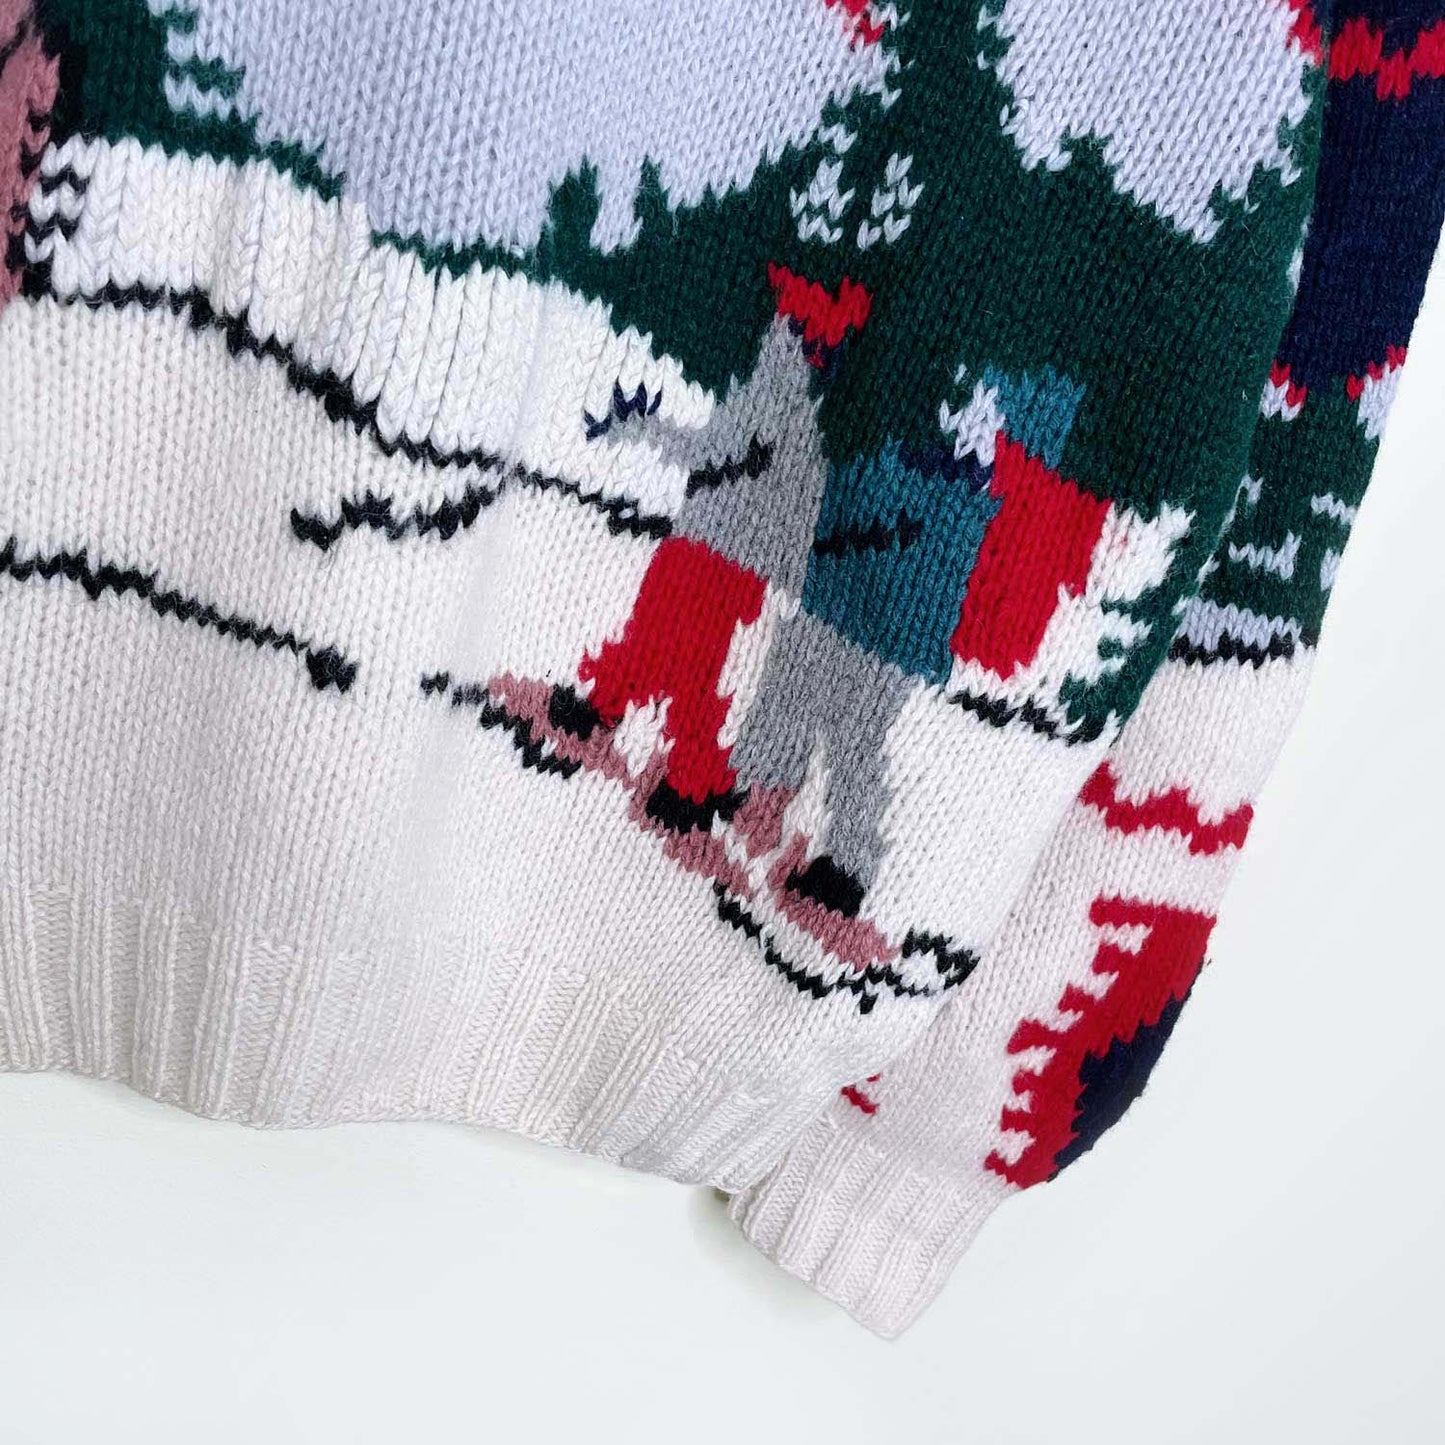 vintage trail atoe trading company wool snowshoe sweater - size medium